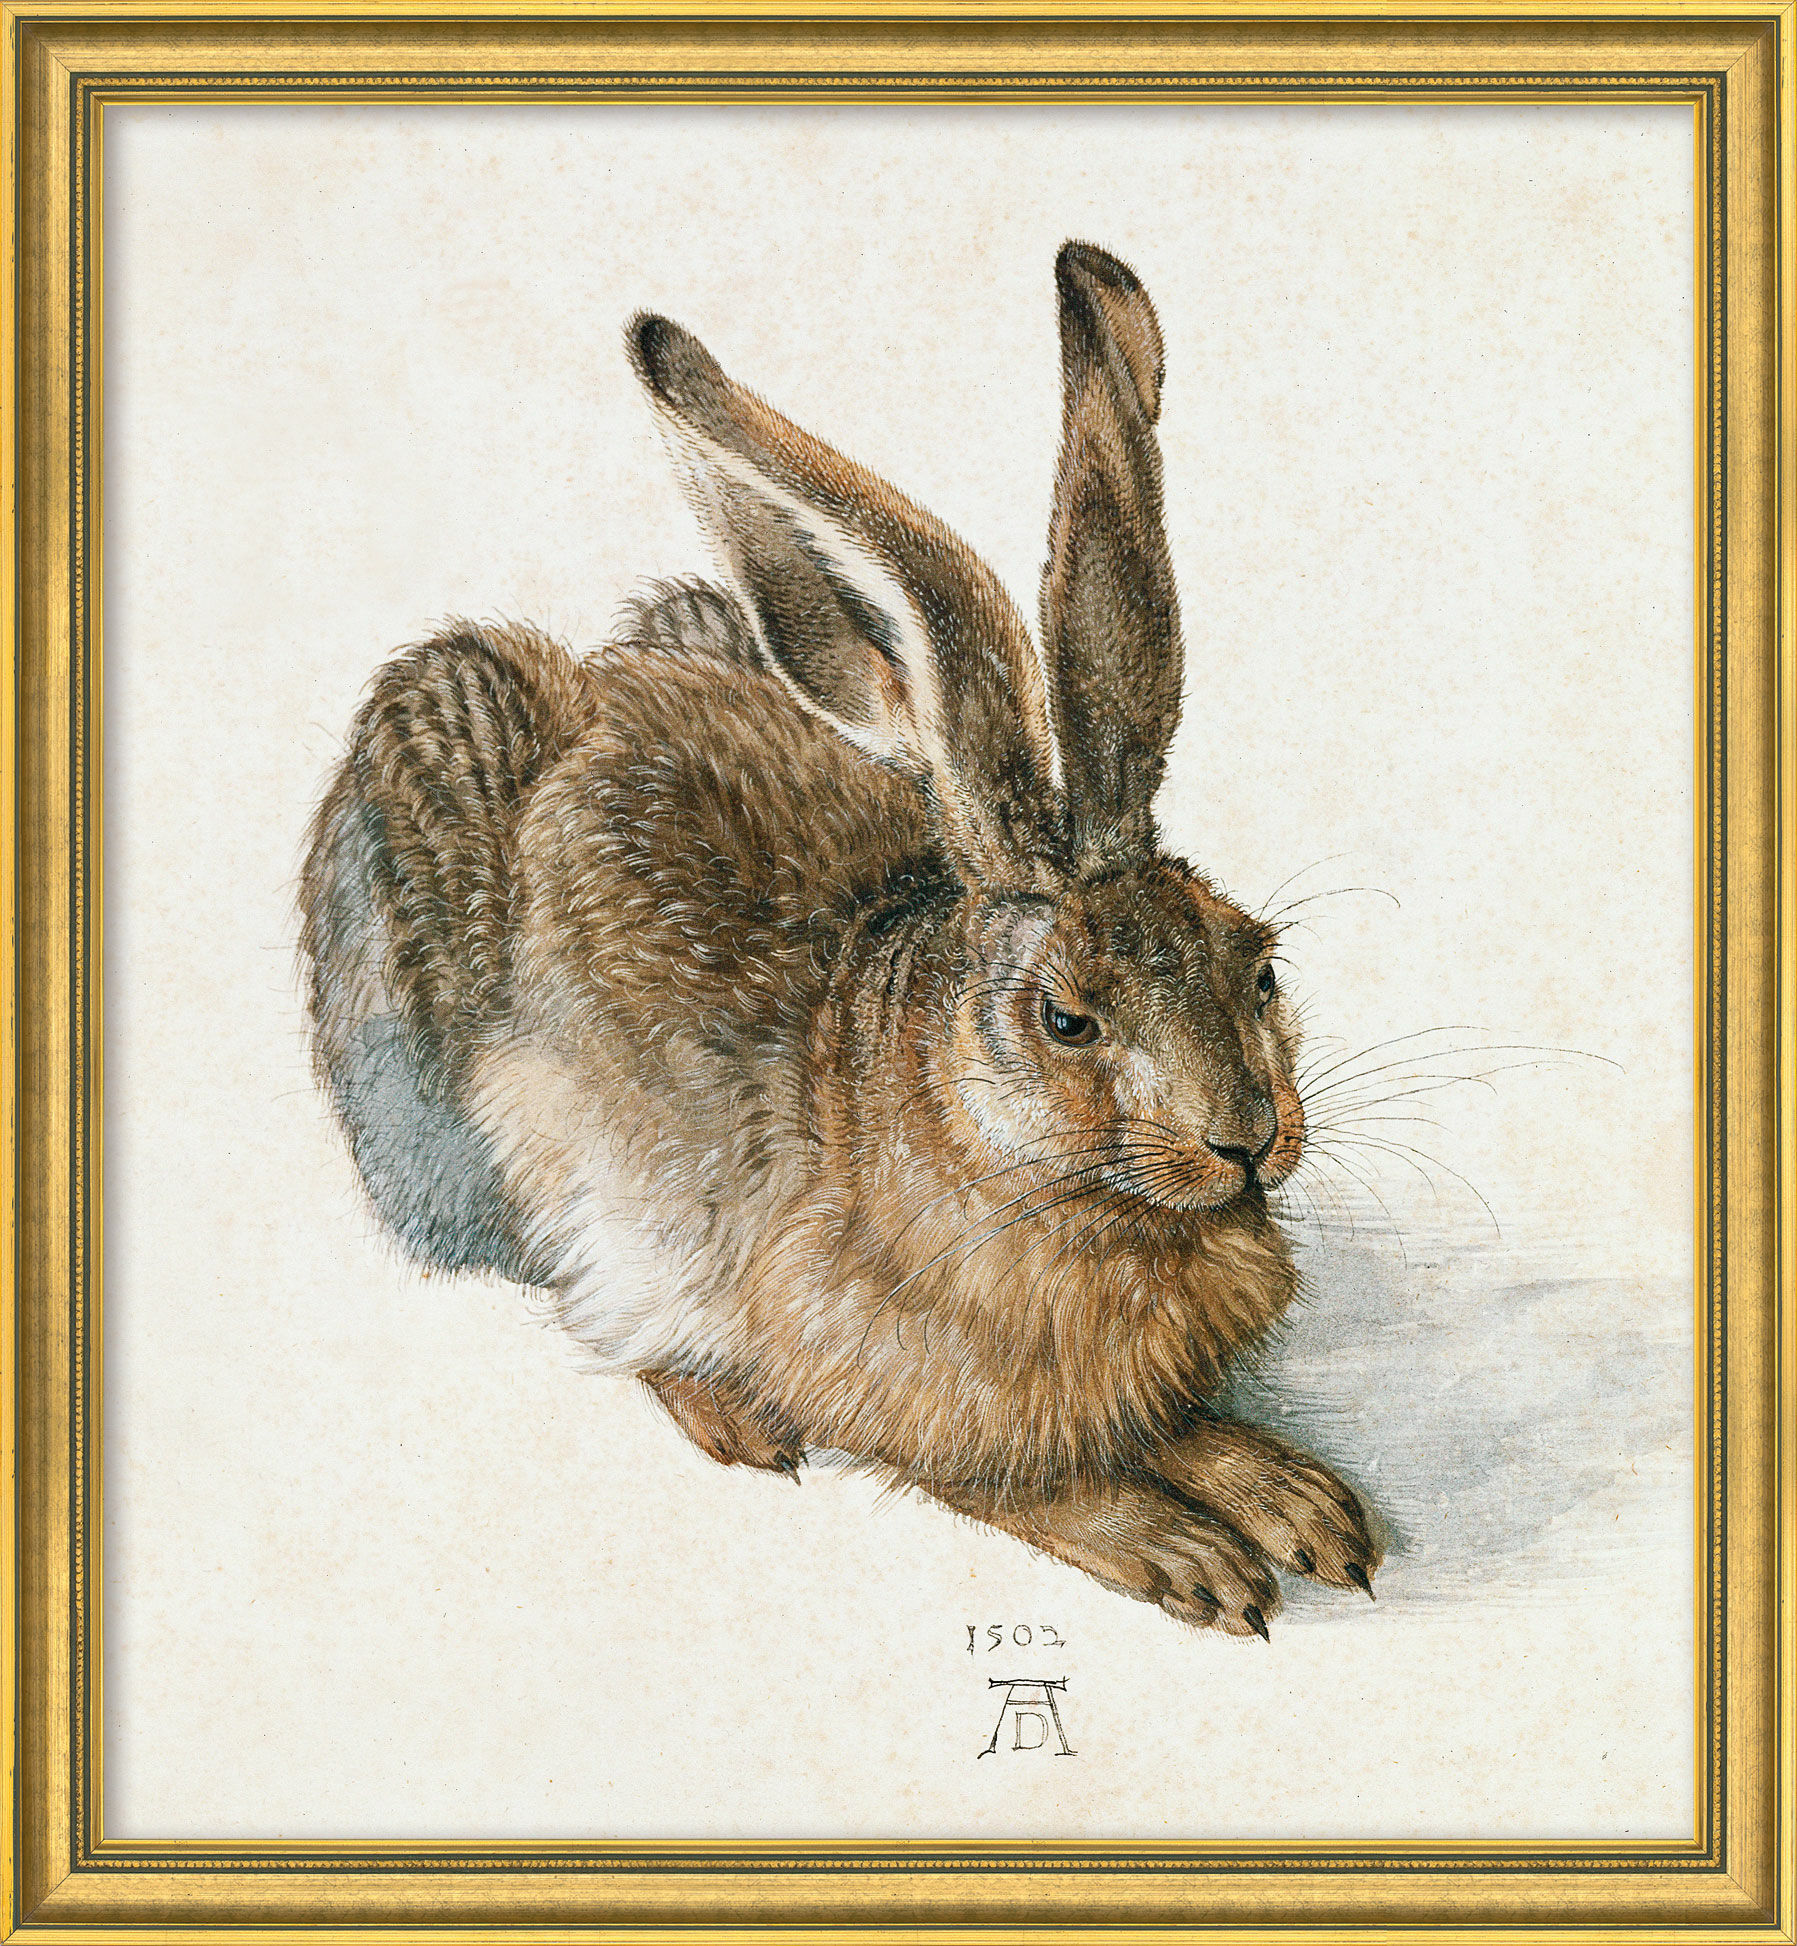 Picture "Young Hare" (1502), golden framed version by Albrecht Dürer